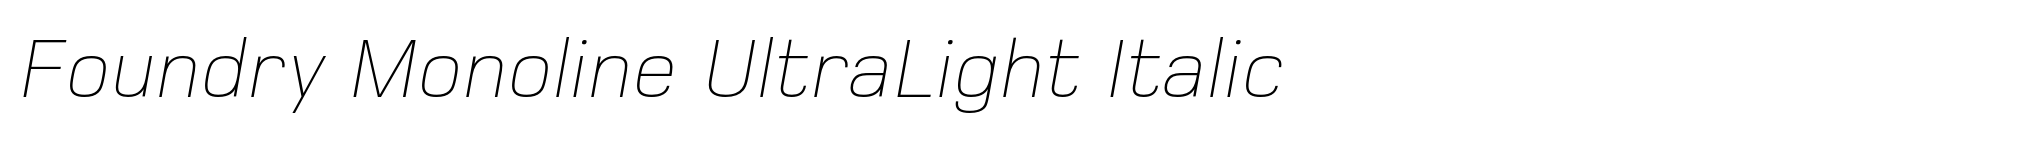 Foundry Monoline UltraLight Italic image